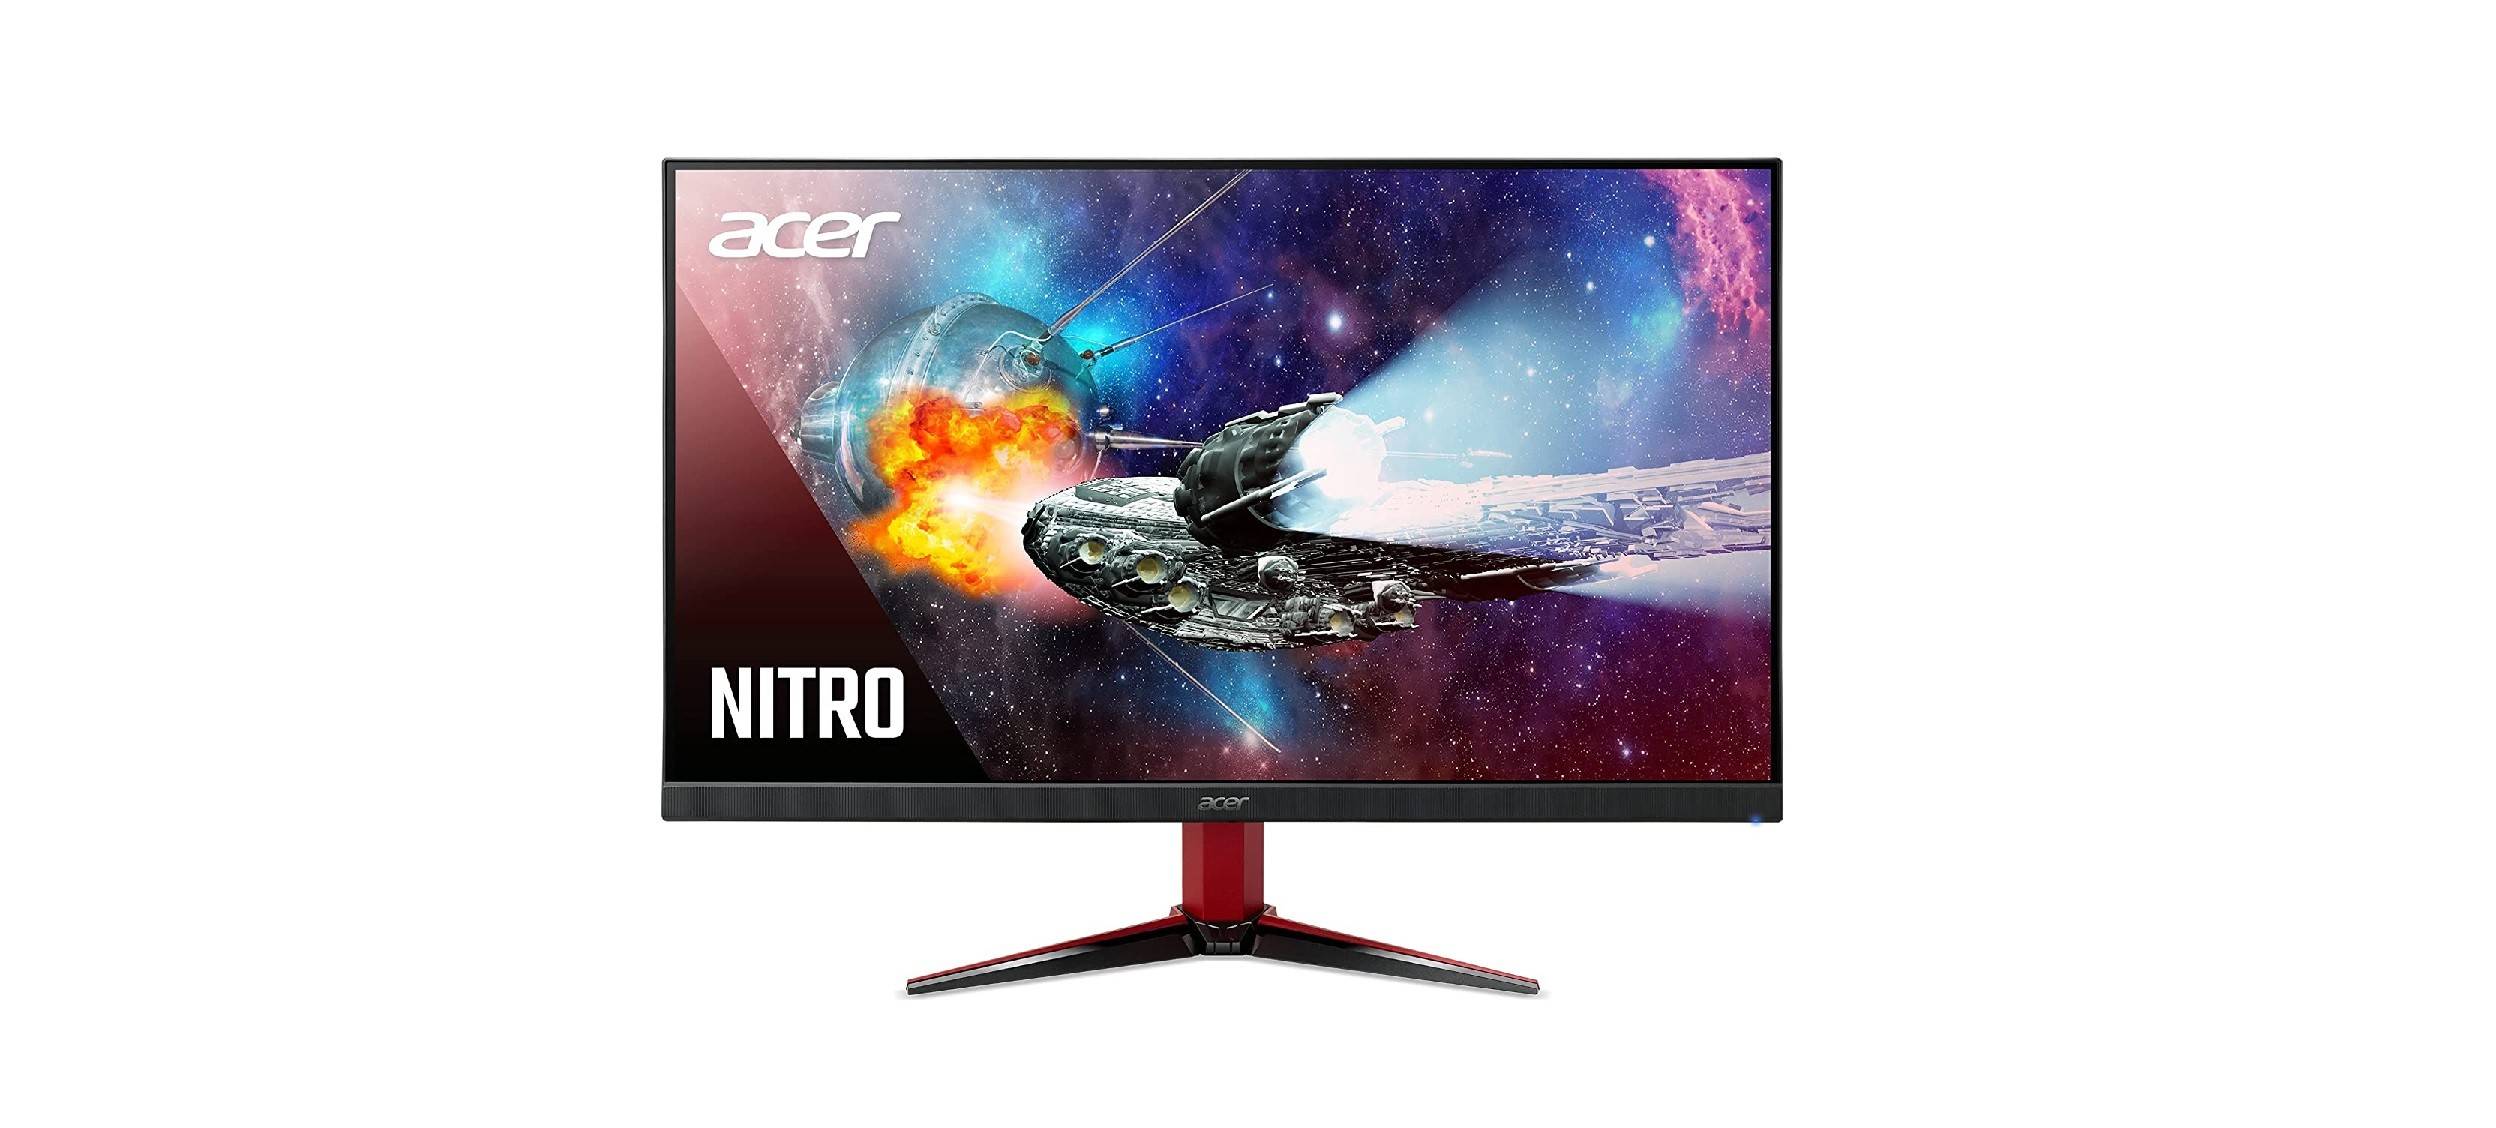 Acer Nitro VG242Y Gaming Monitor long